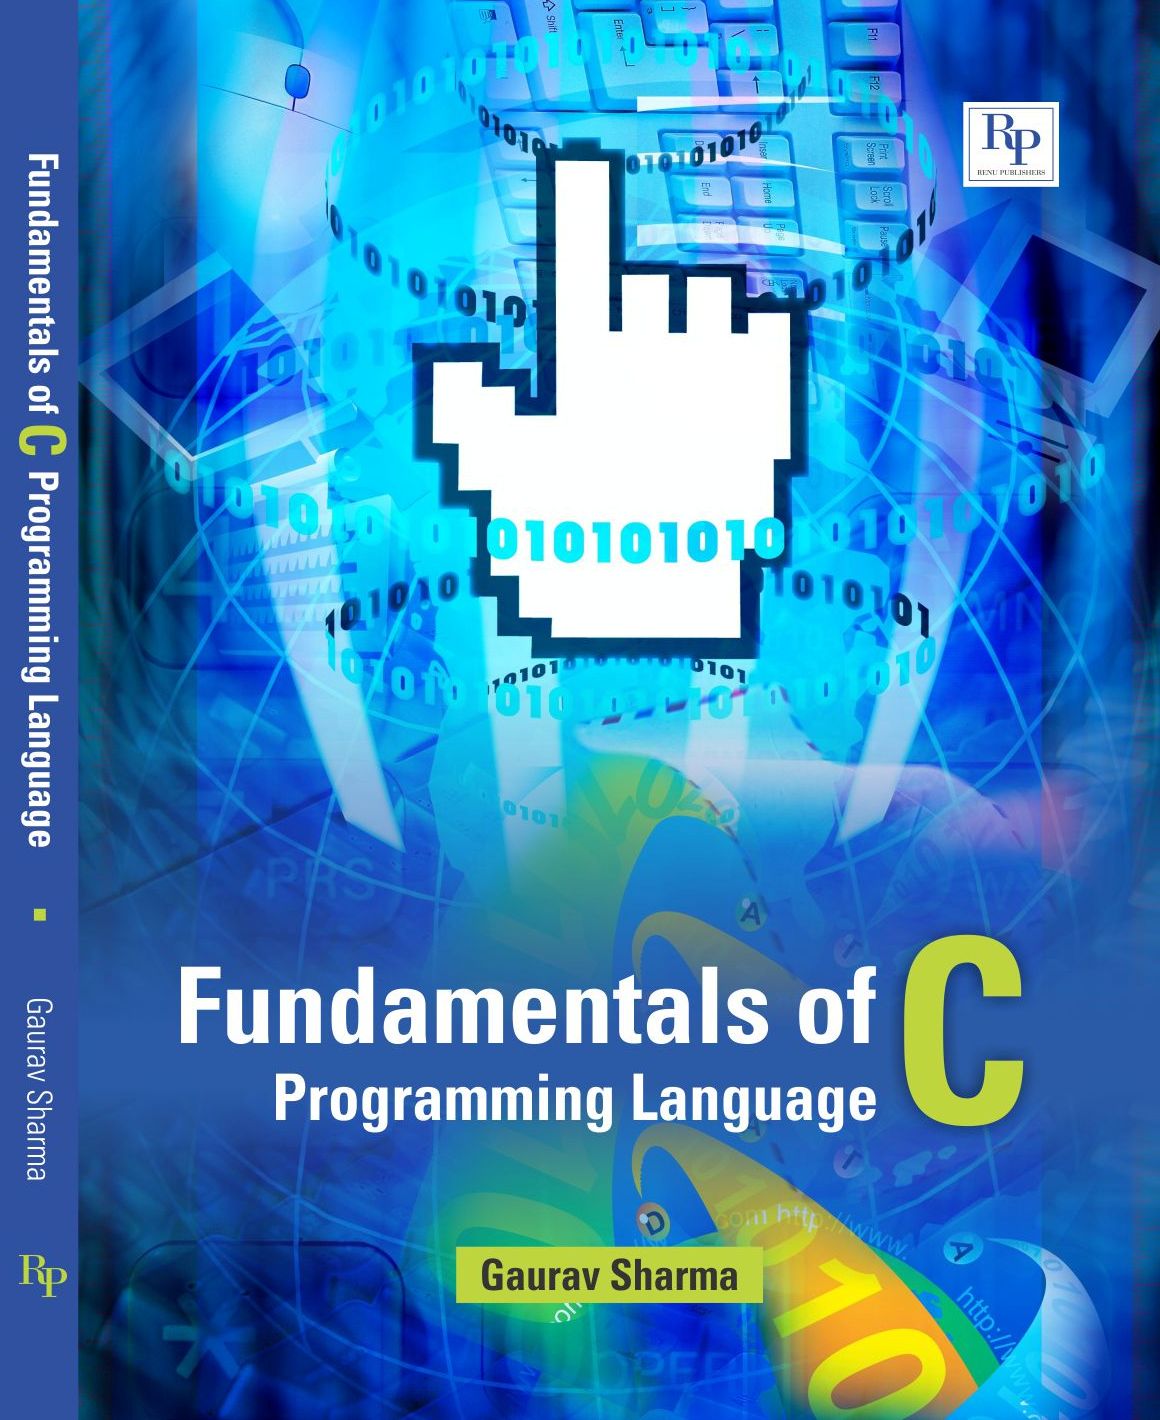 Fundaments of C Programming LanguageS (1).jpg